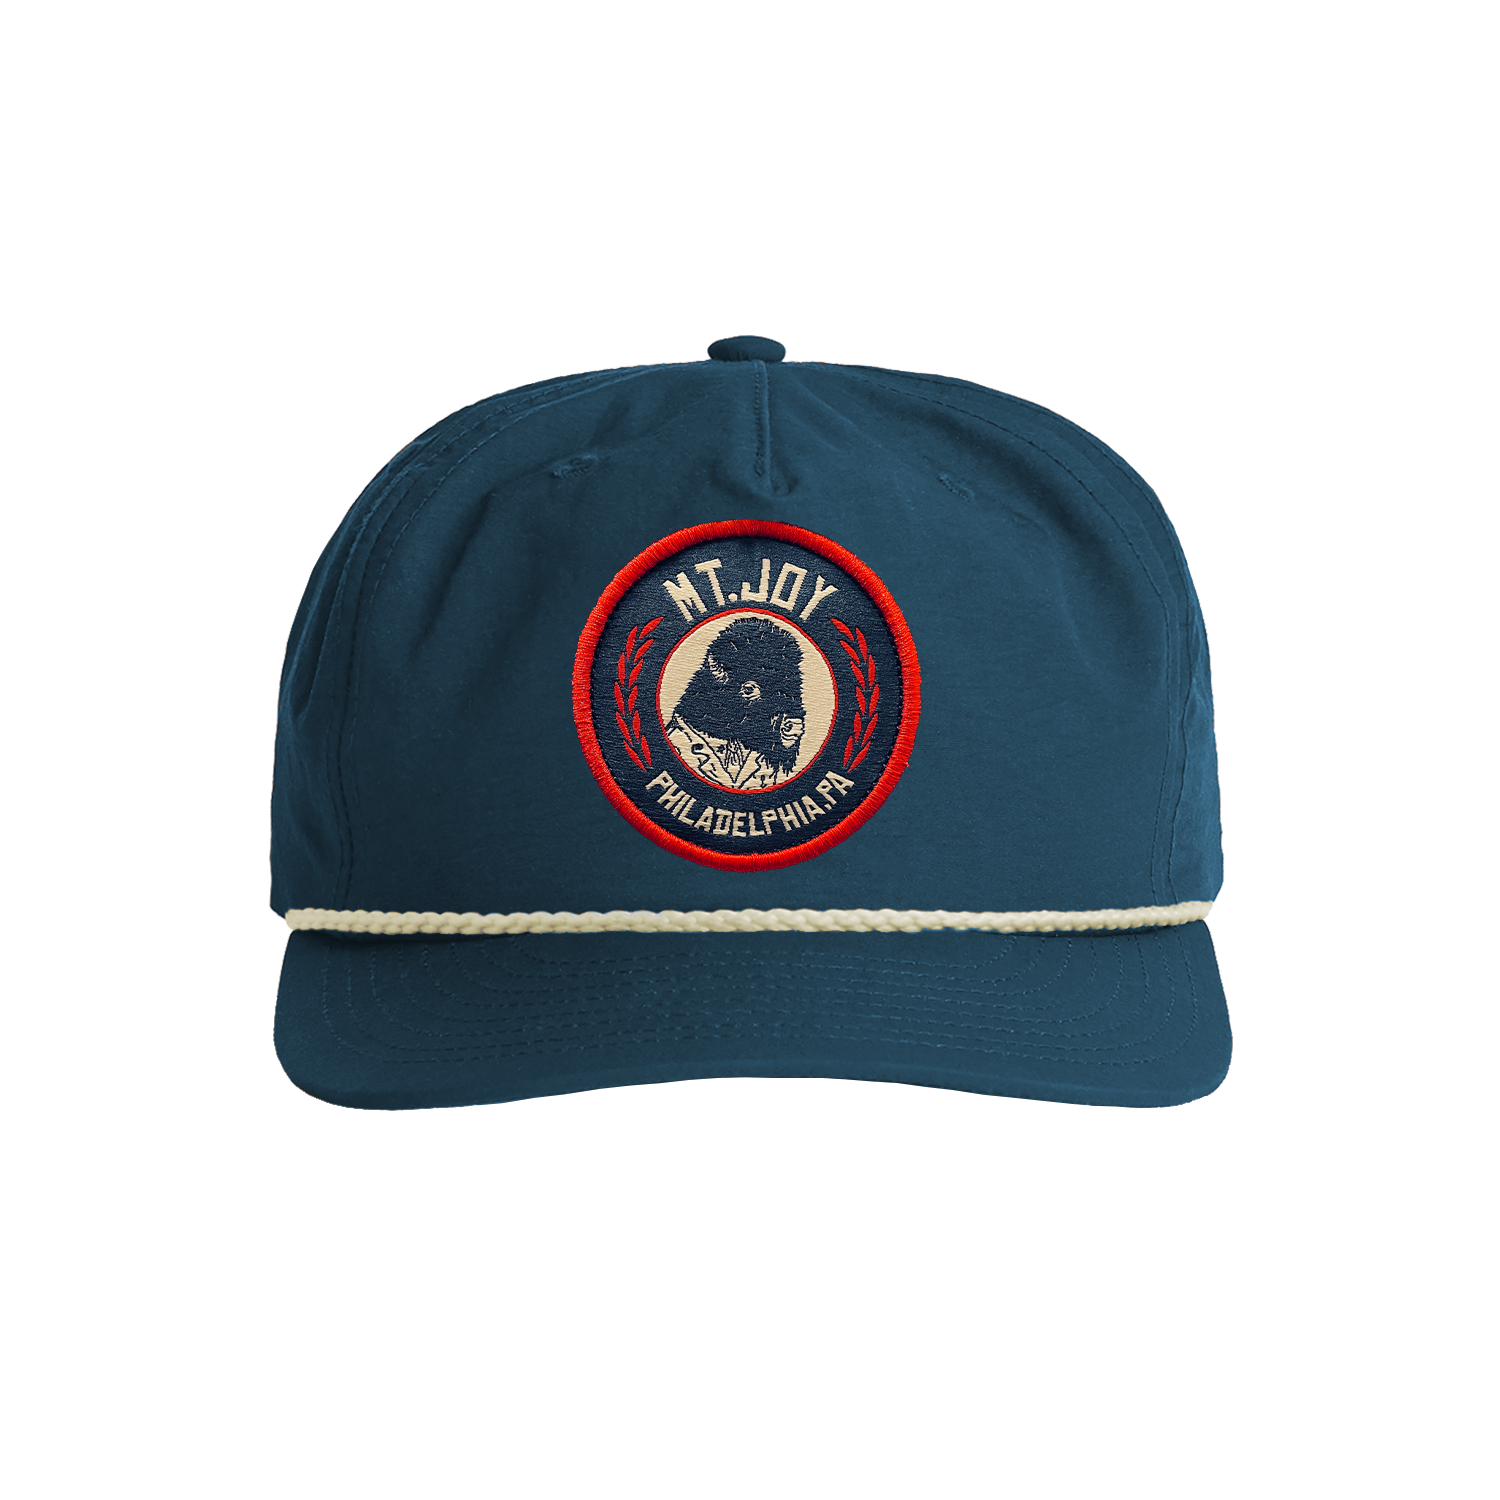 Mt. Joy Bison Navy Hat